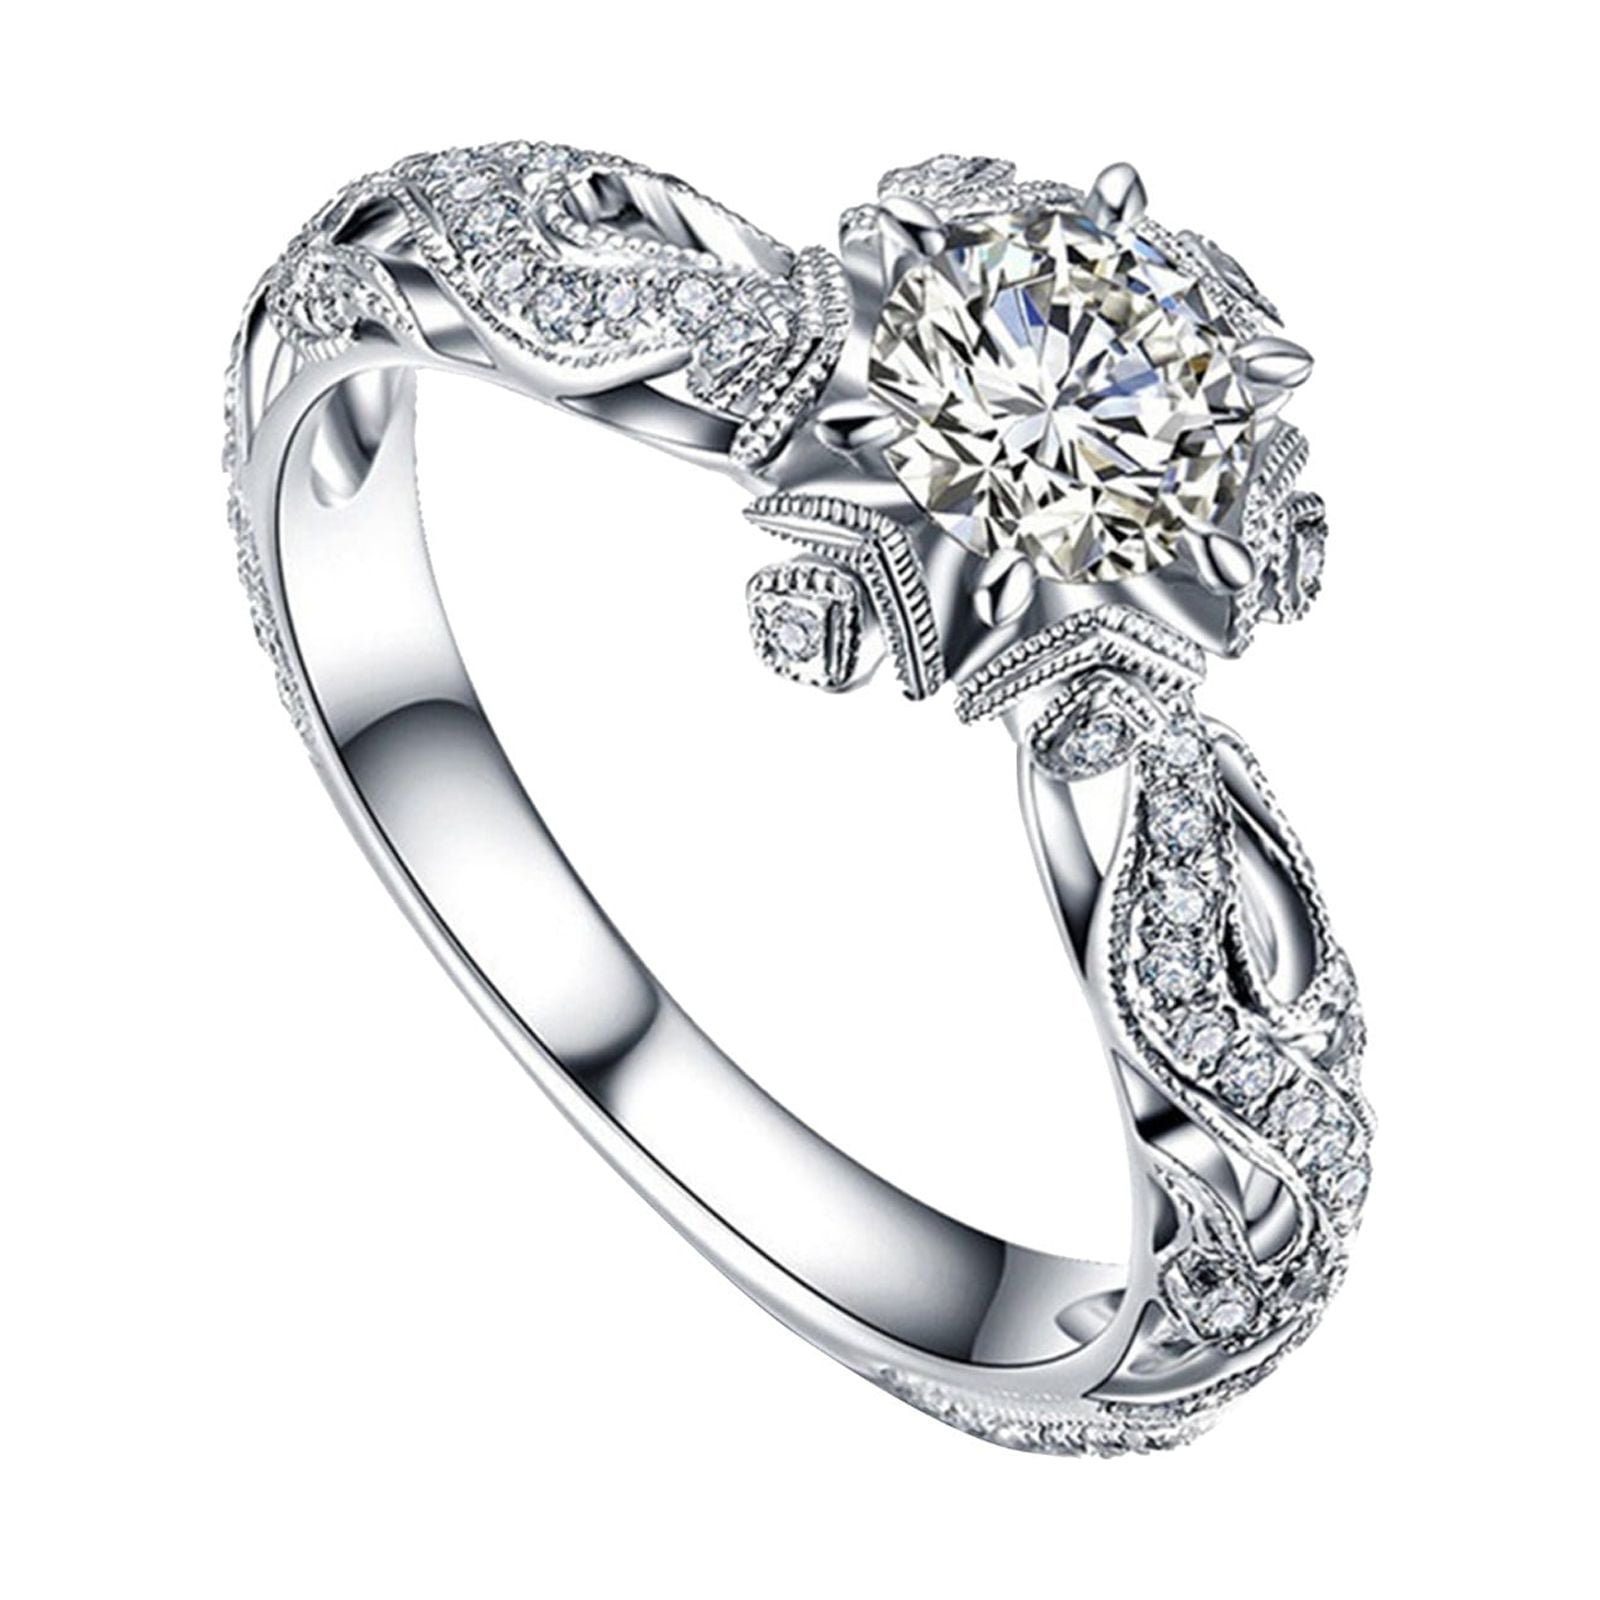 Wedding Diamond Vintage Ring Band Engagement Womens Beautiful Silver Rings Knit Simple Promise Matching Size Chart Women Fashion 899330e8 b23e 4fd7 aa07 86d1c18db82c.ad3cc9b67b550e24b6a76d17933acef7